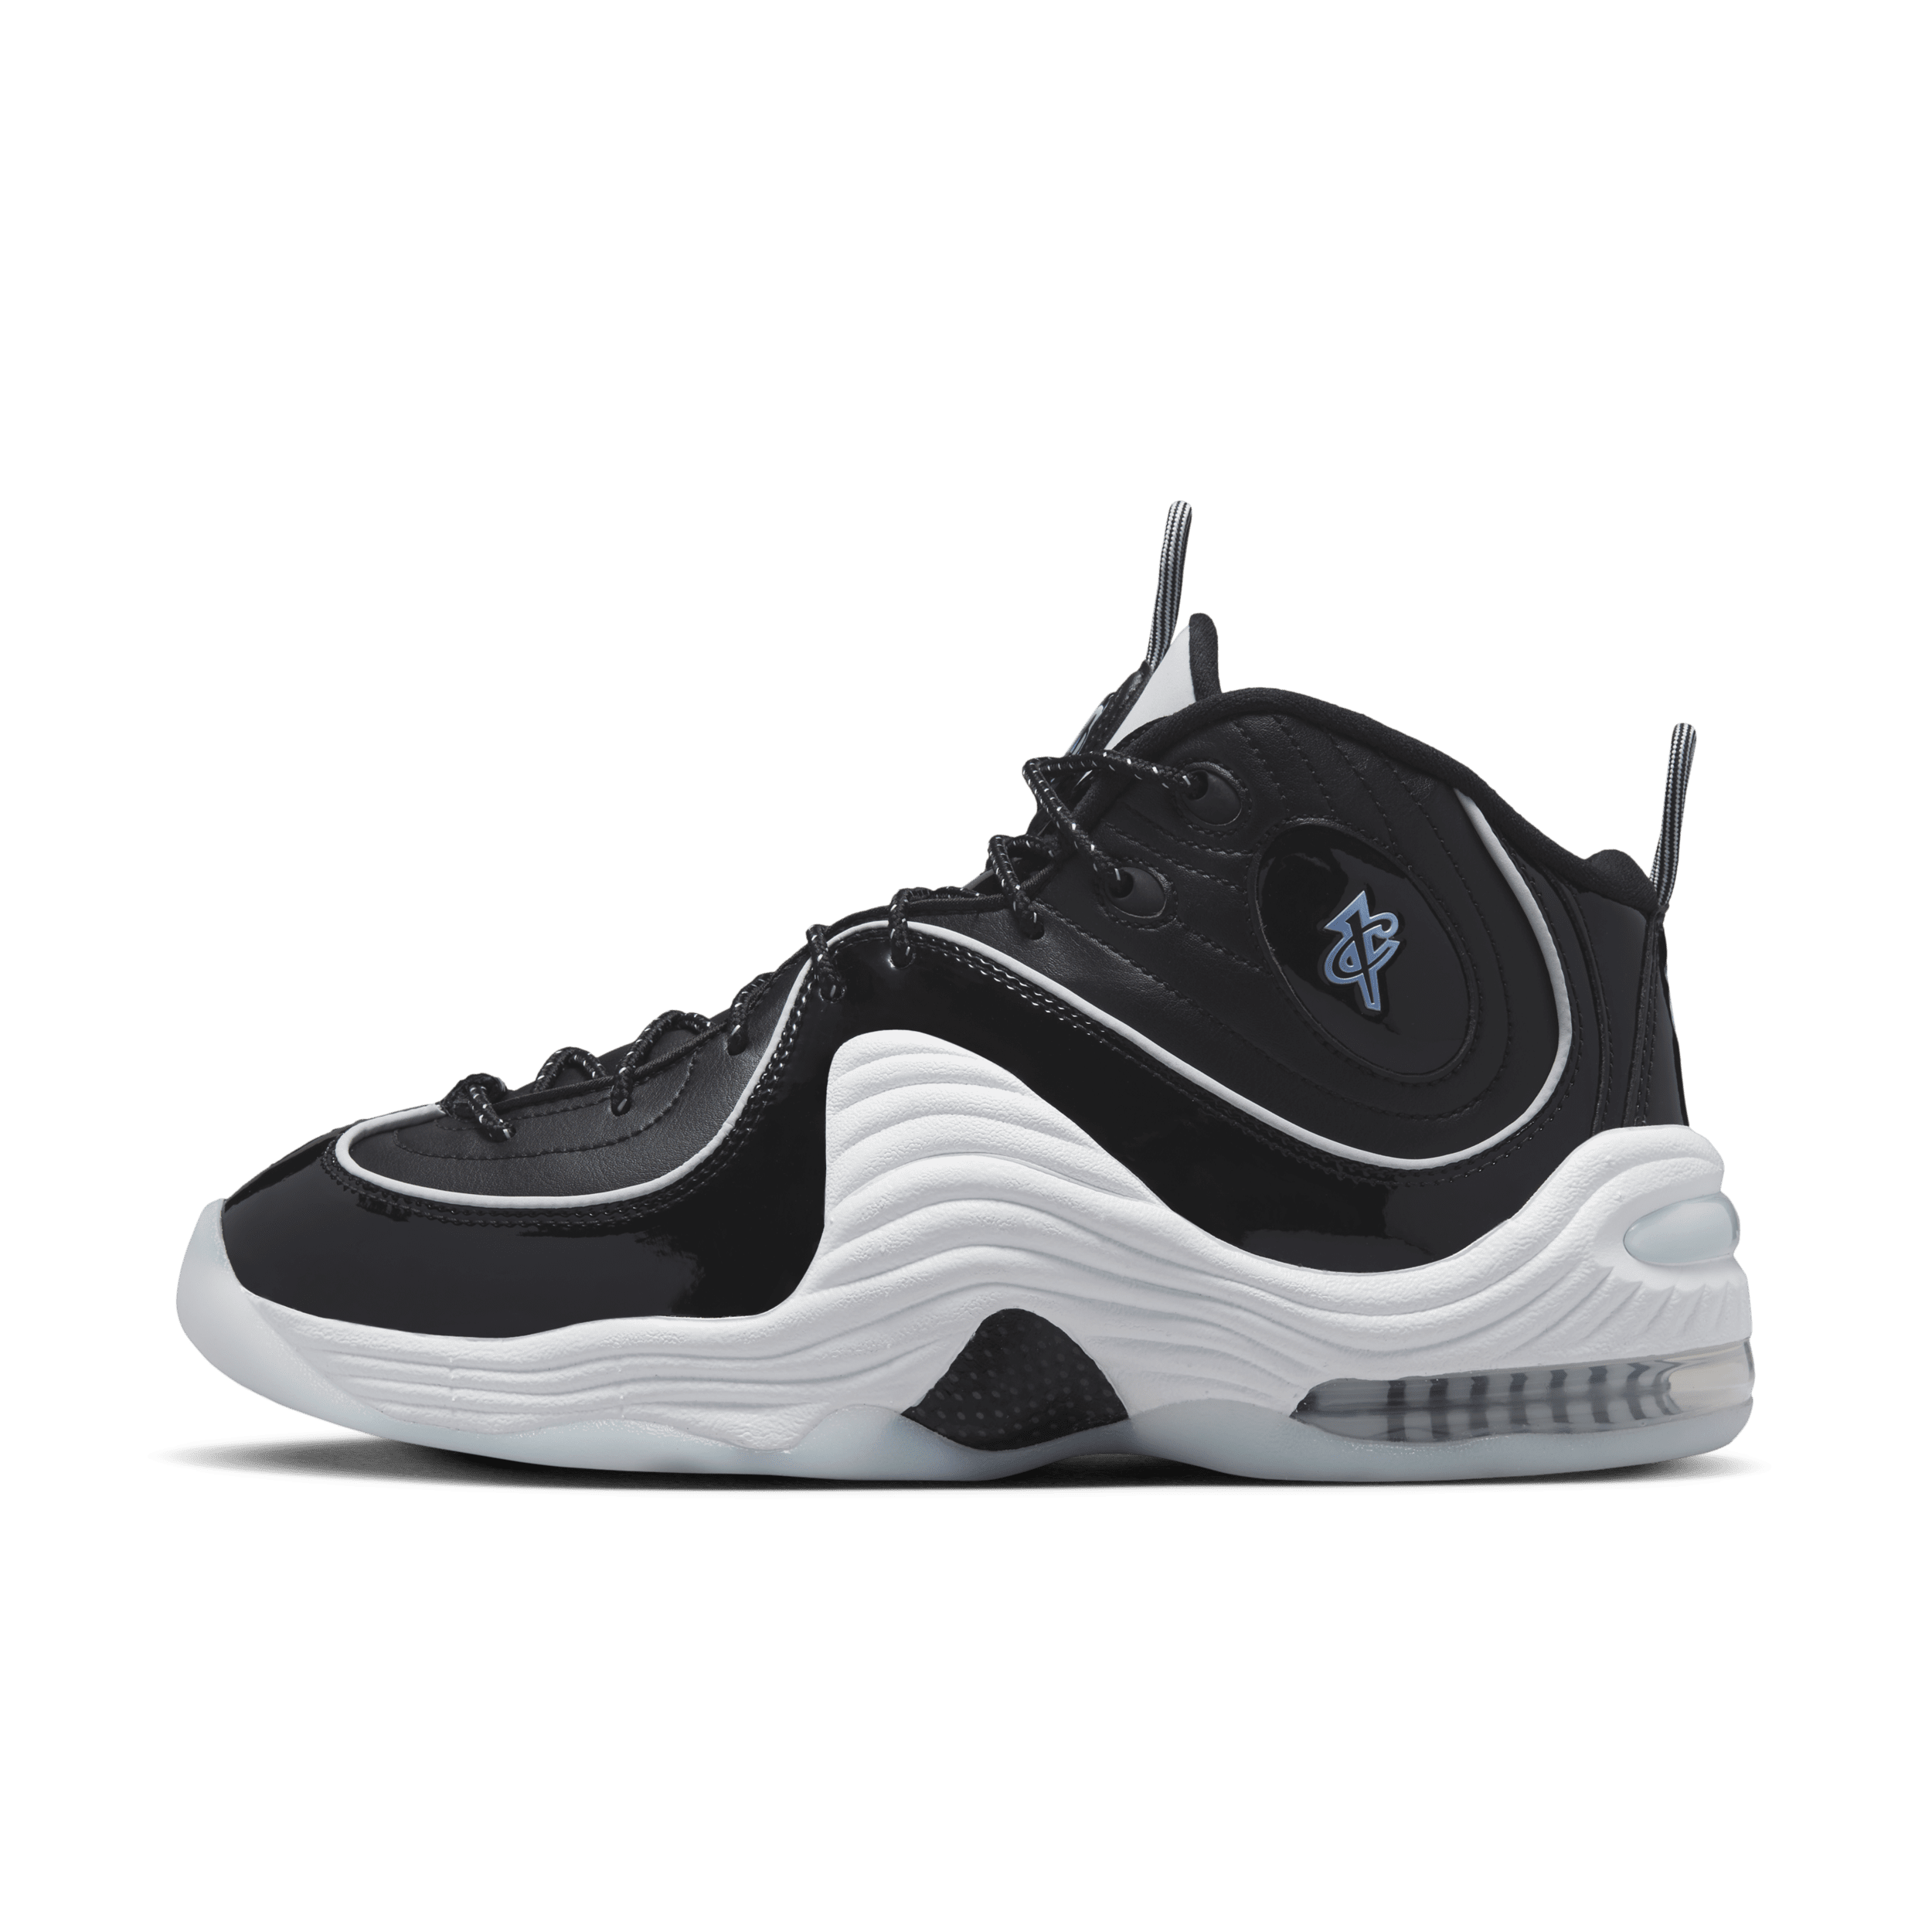 Nike Air Penny 2 Herenschoenen – Zwart